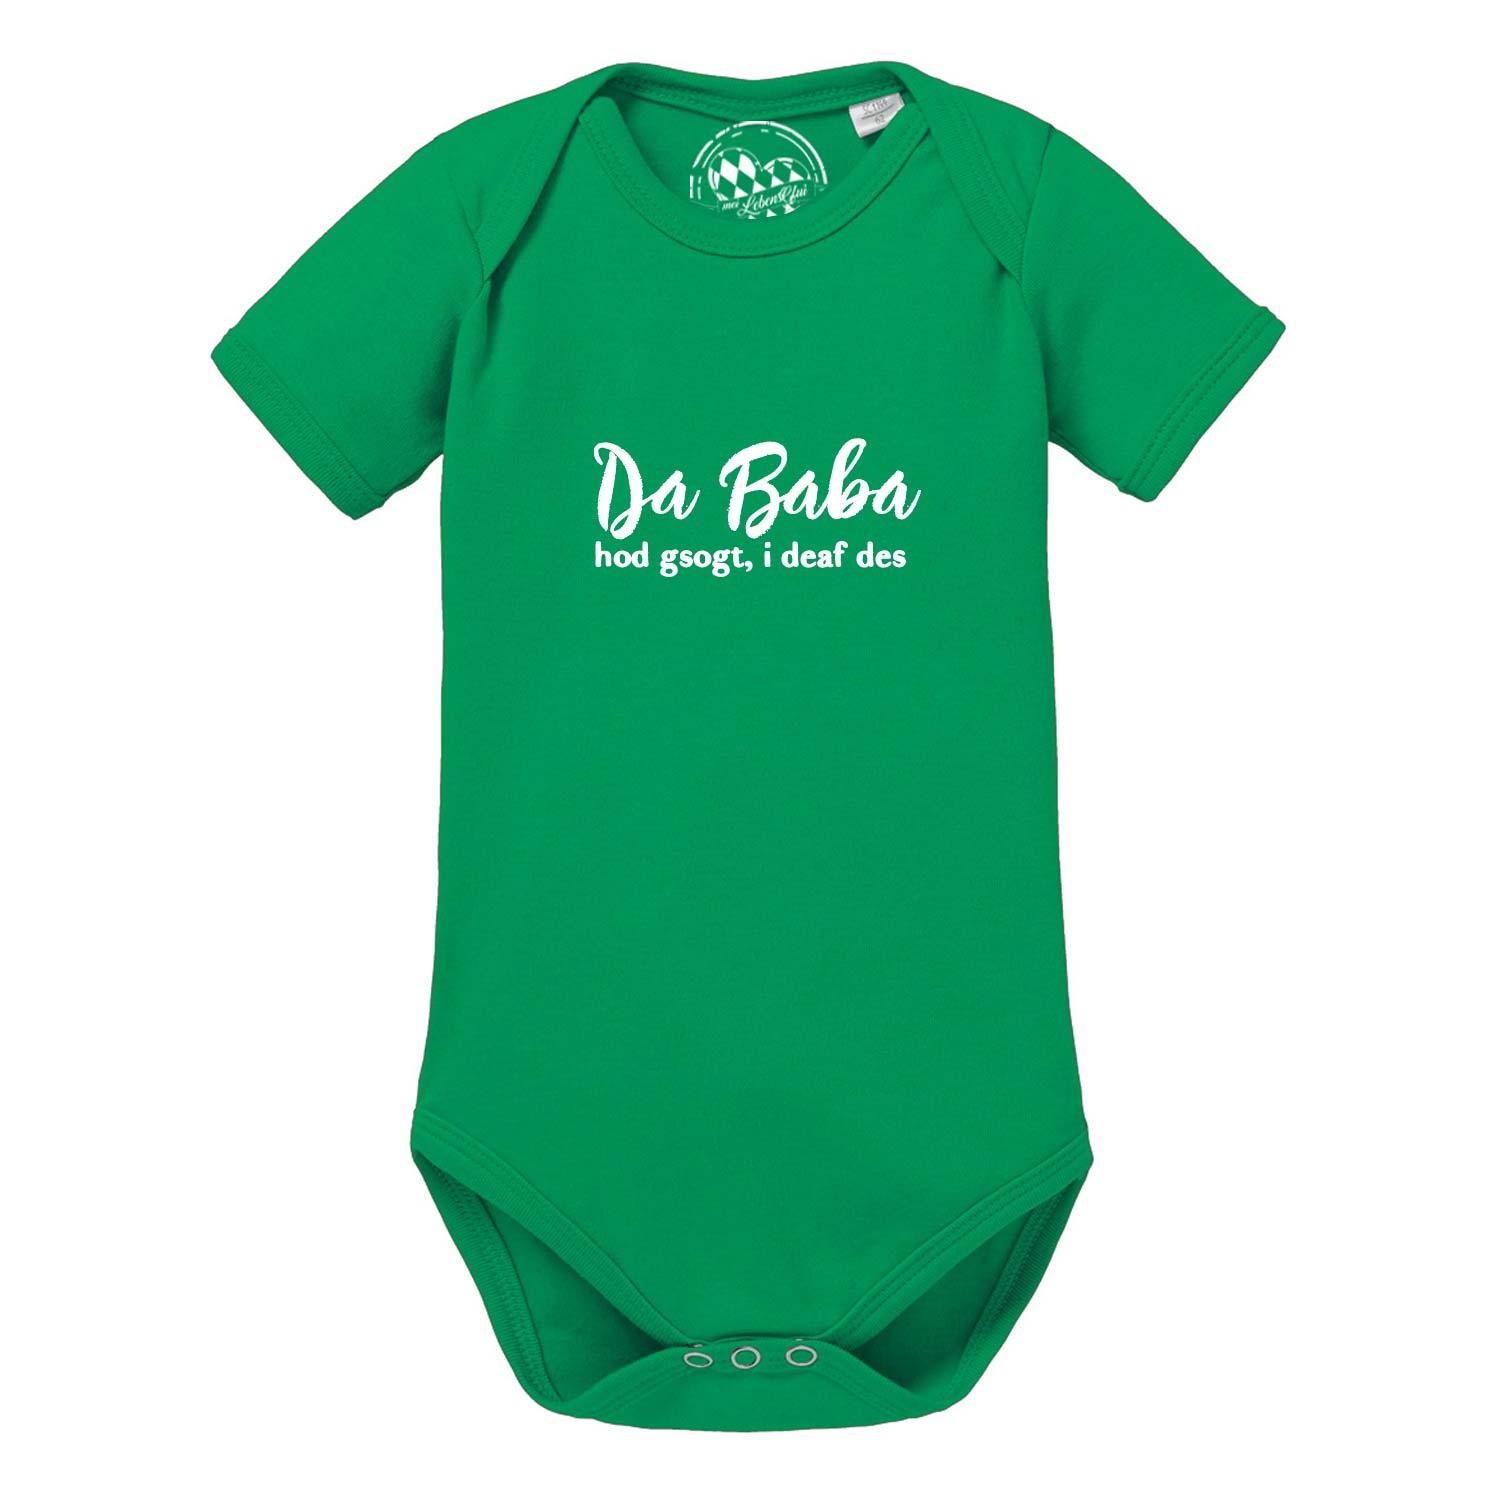 Baby Body "Baba sogt, i deaf des!" - bavariashop - mei LebensGfui